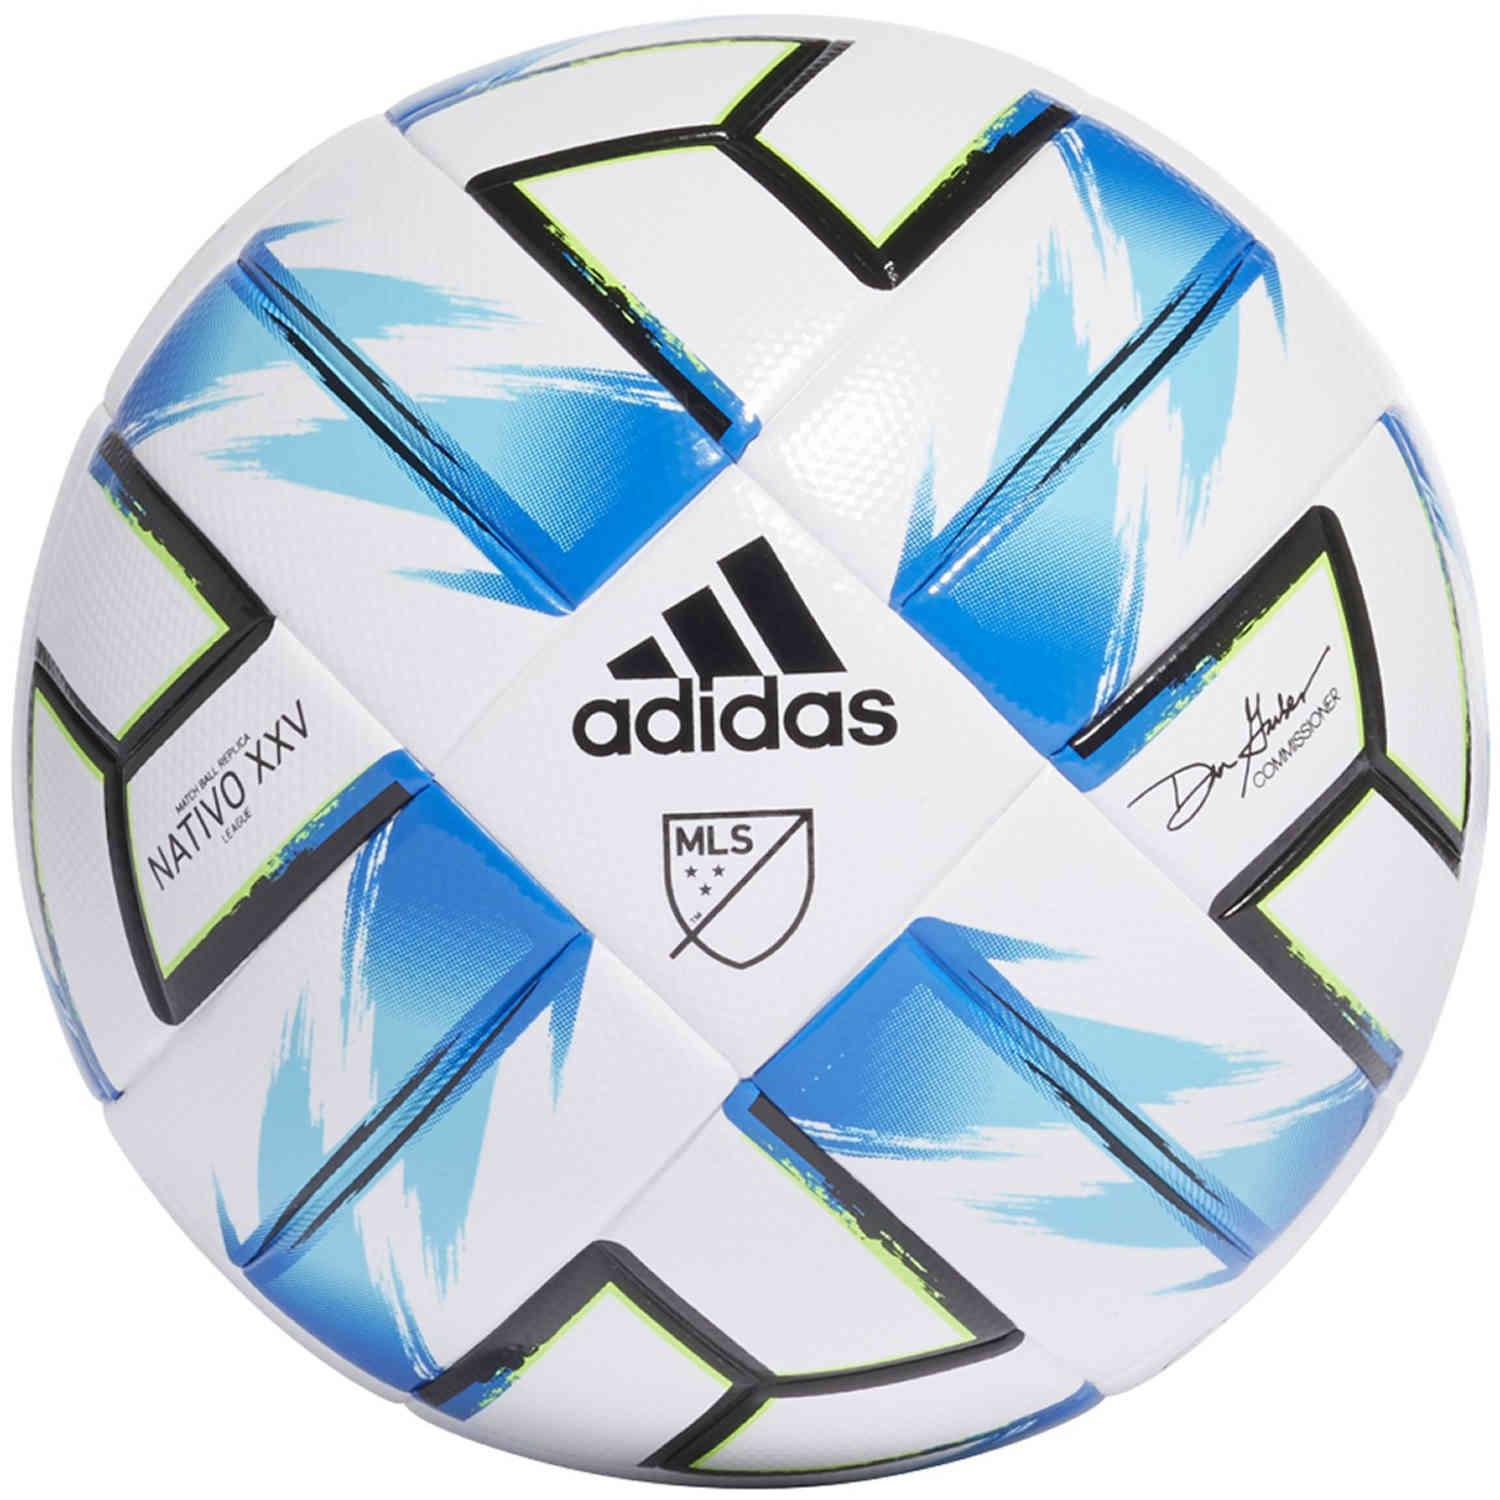 adidas 2020 soccer ball